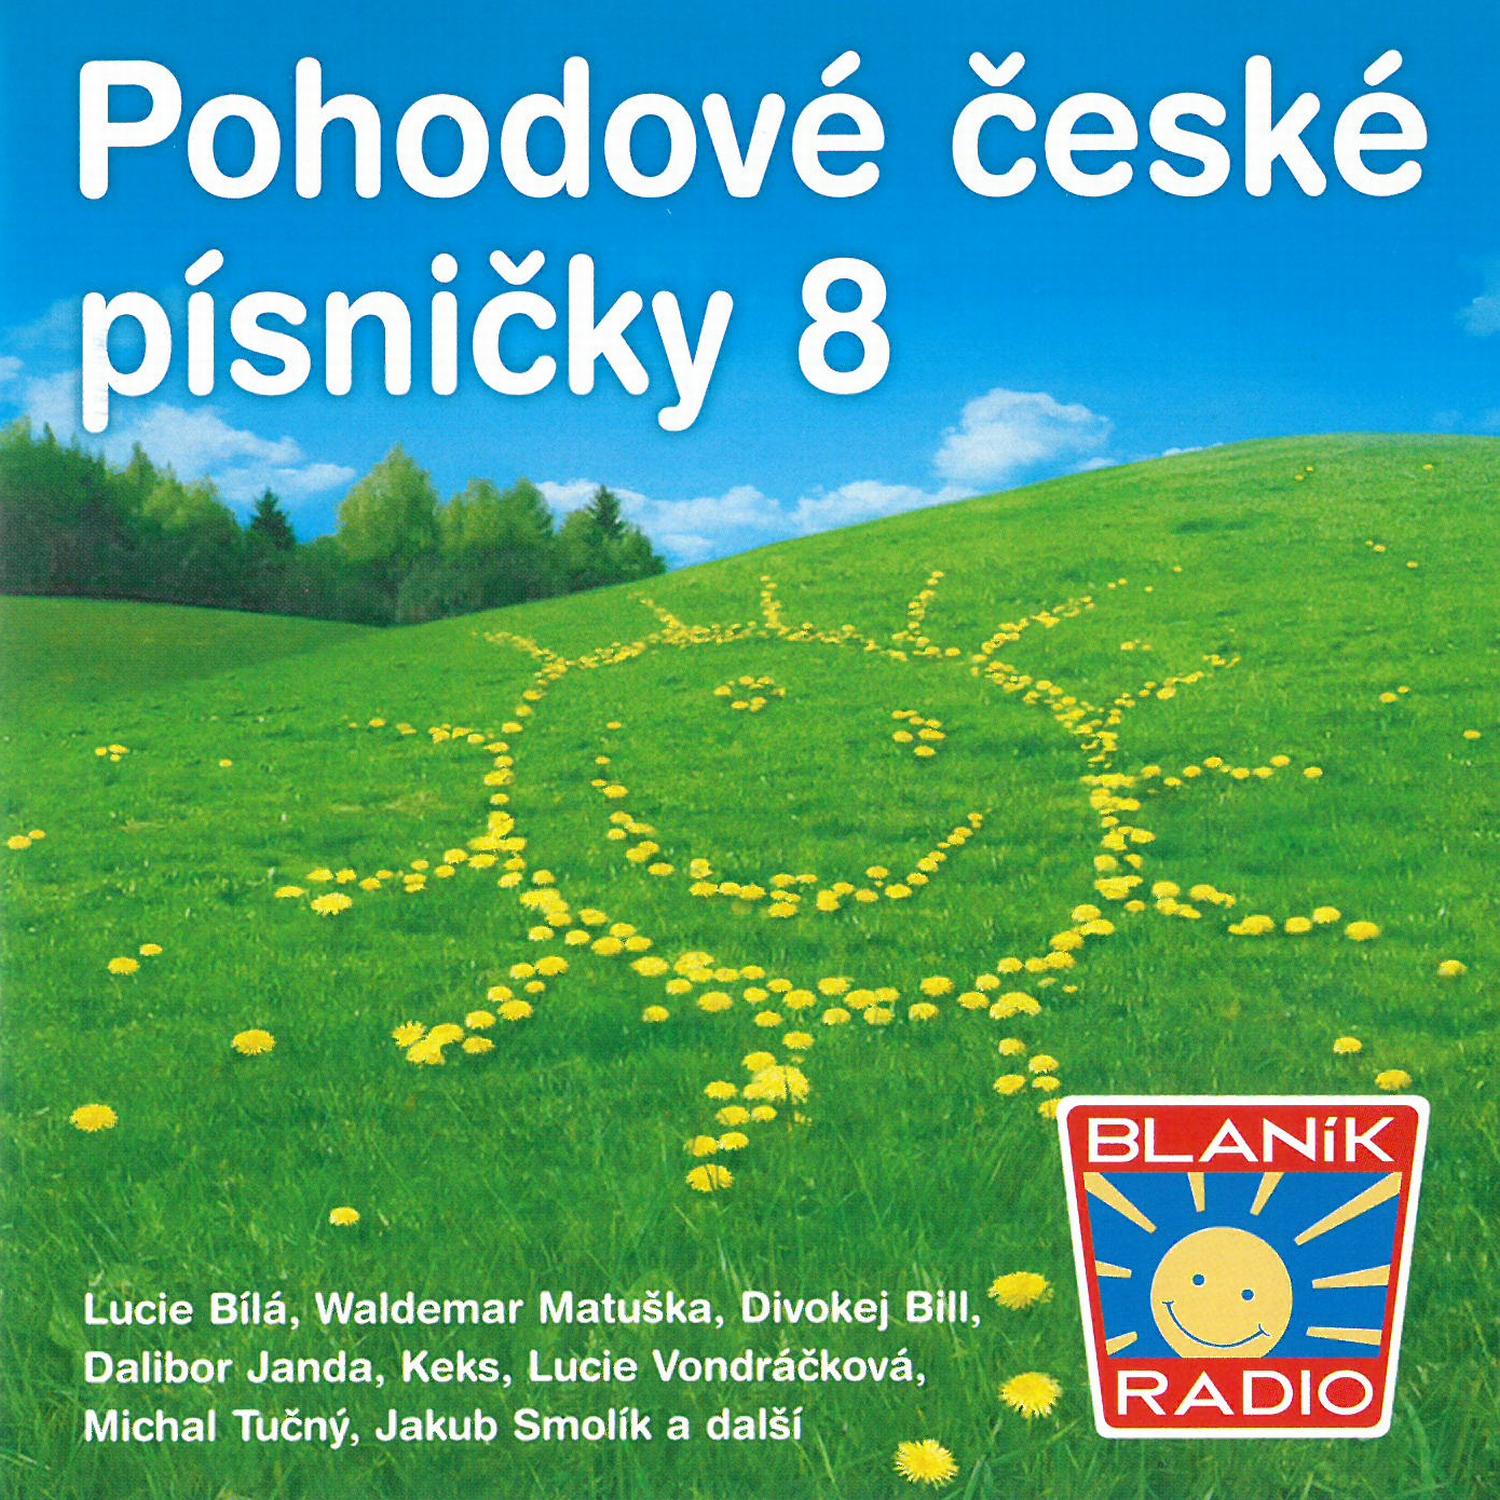 CD Shop - VARIOUS POHODOVE CESKE PISNICKY 8